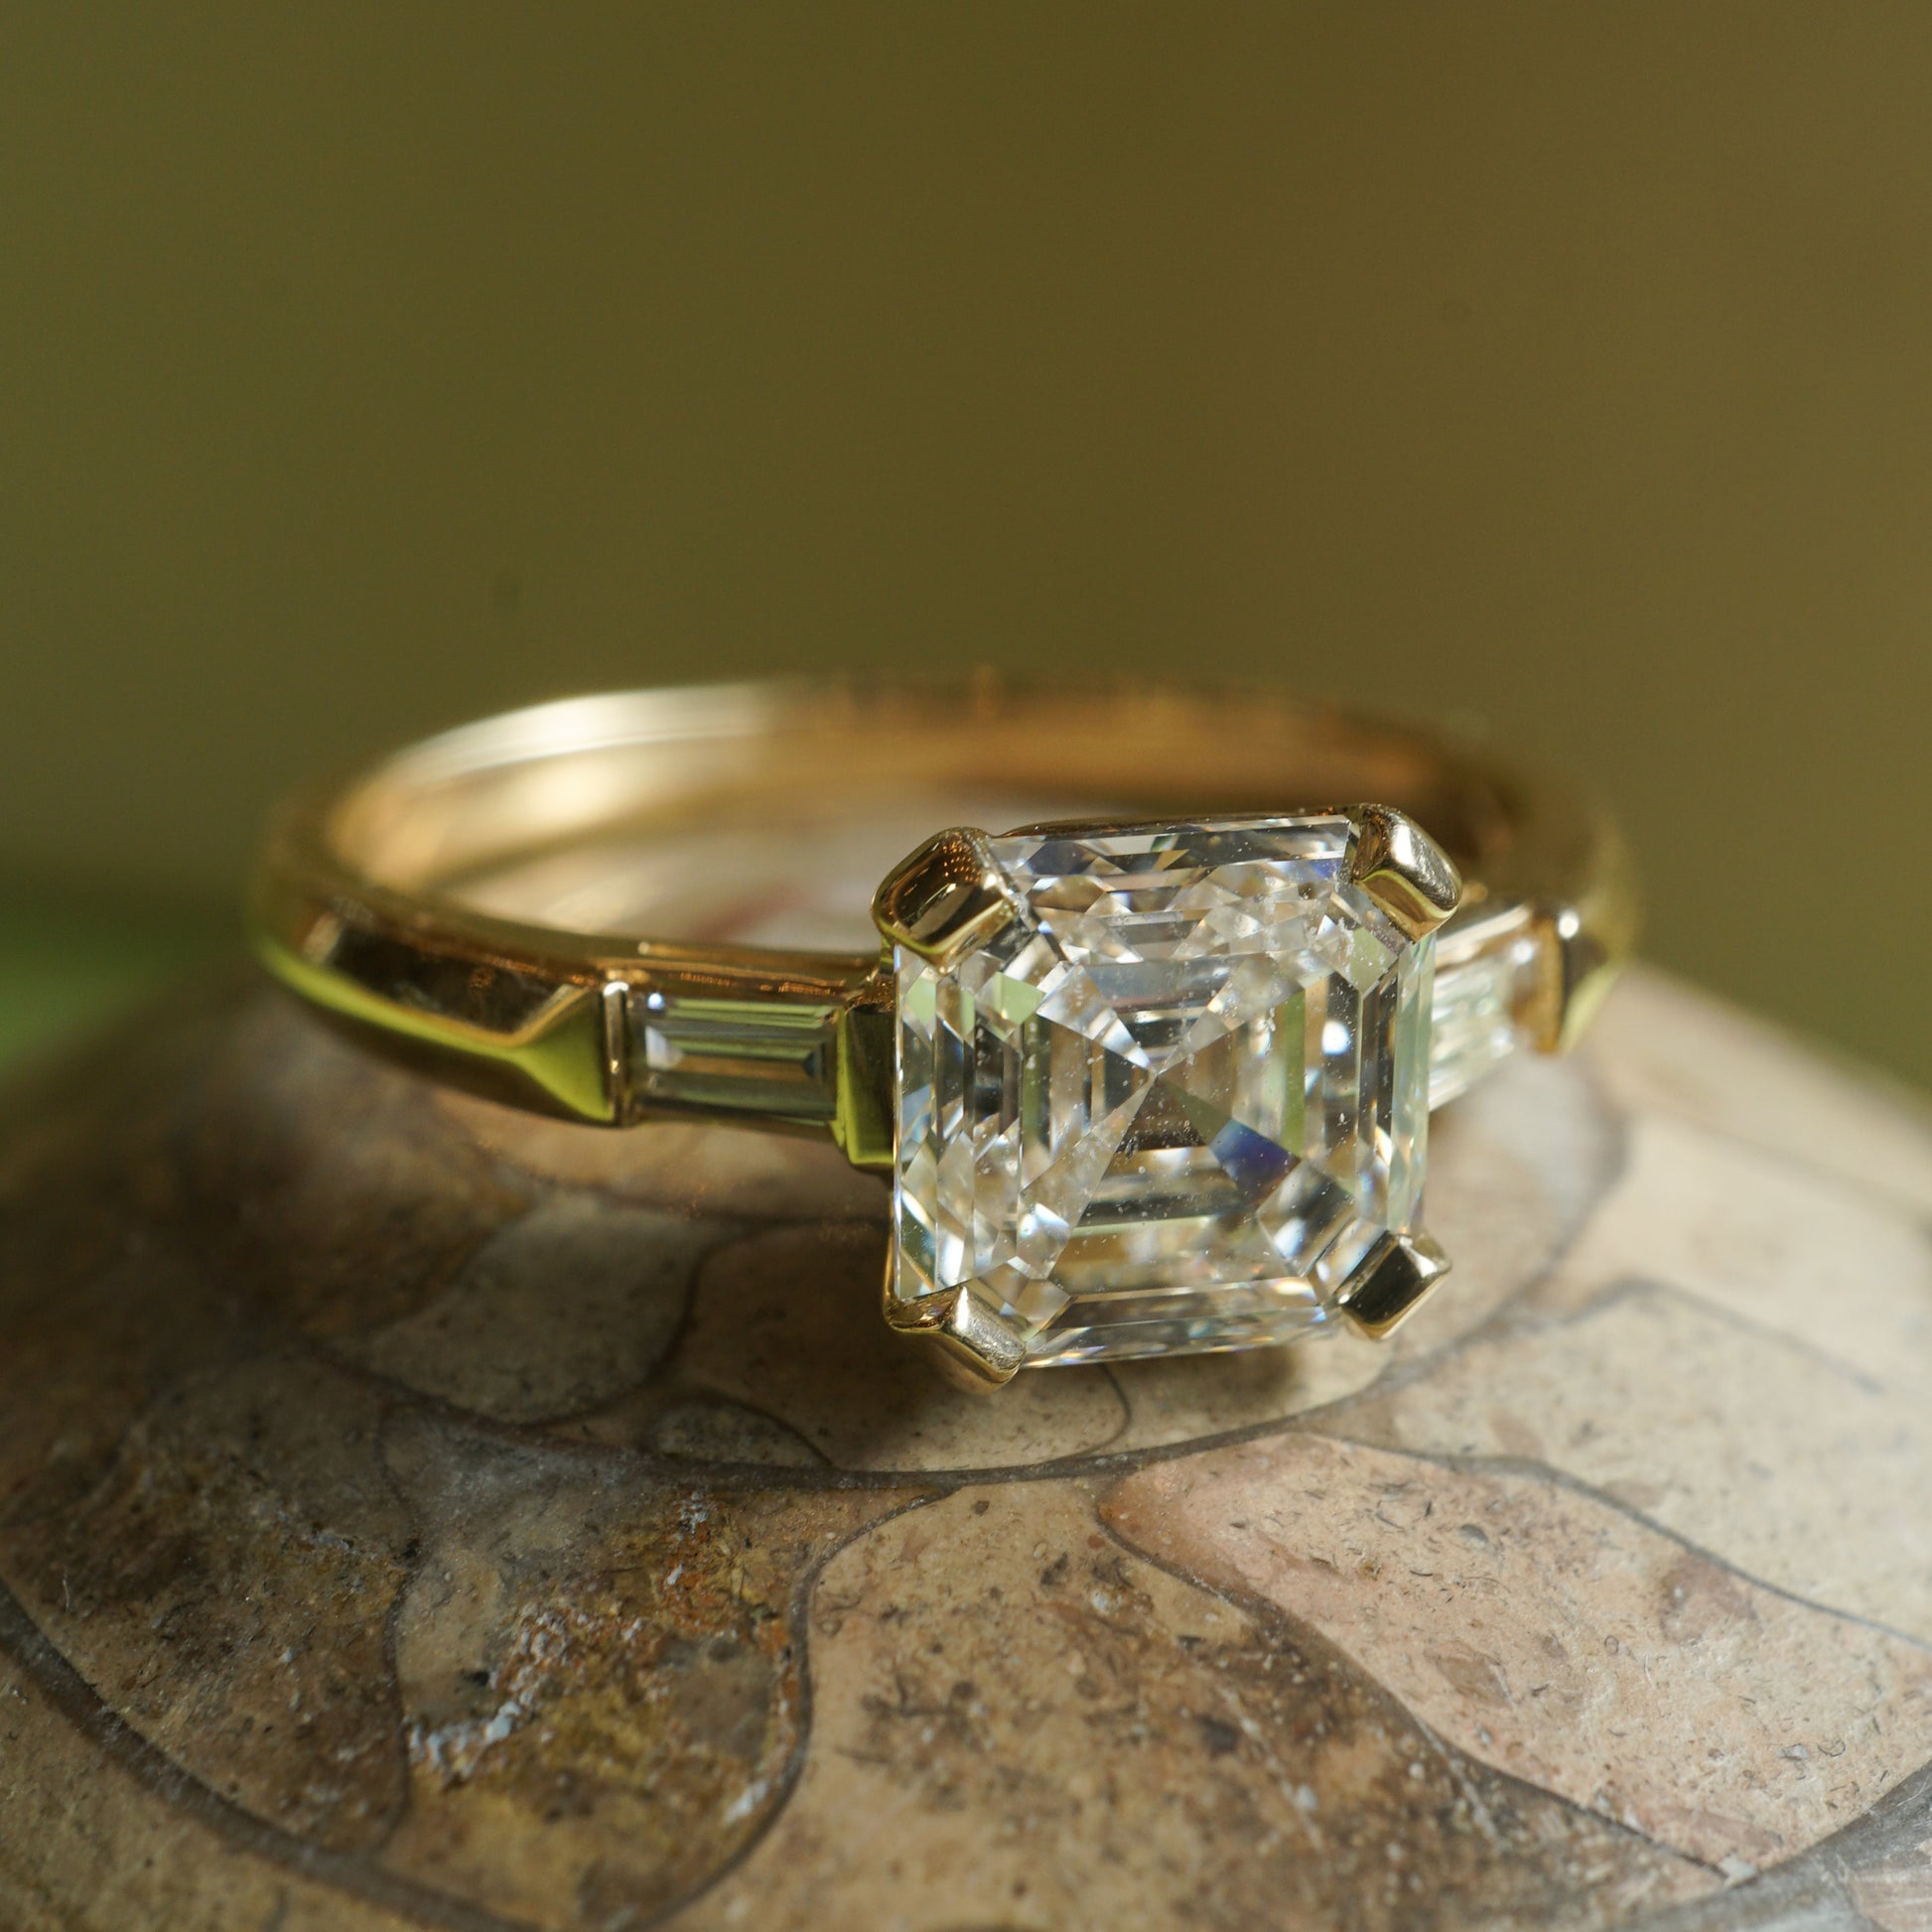 1.50 Asscher Cut Diamond Engagement Ring in 14k Yellow GoldComposition: 14 Karat Yellow Gold Ring Size: 5.75 Total Diamond Weight: 1.66ct Total Gram Weight: 2.5 g Inscription: 14k
      